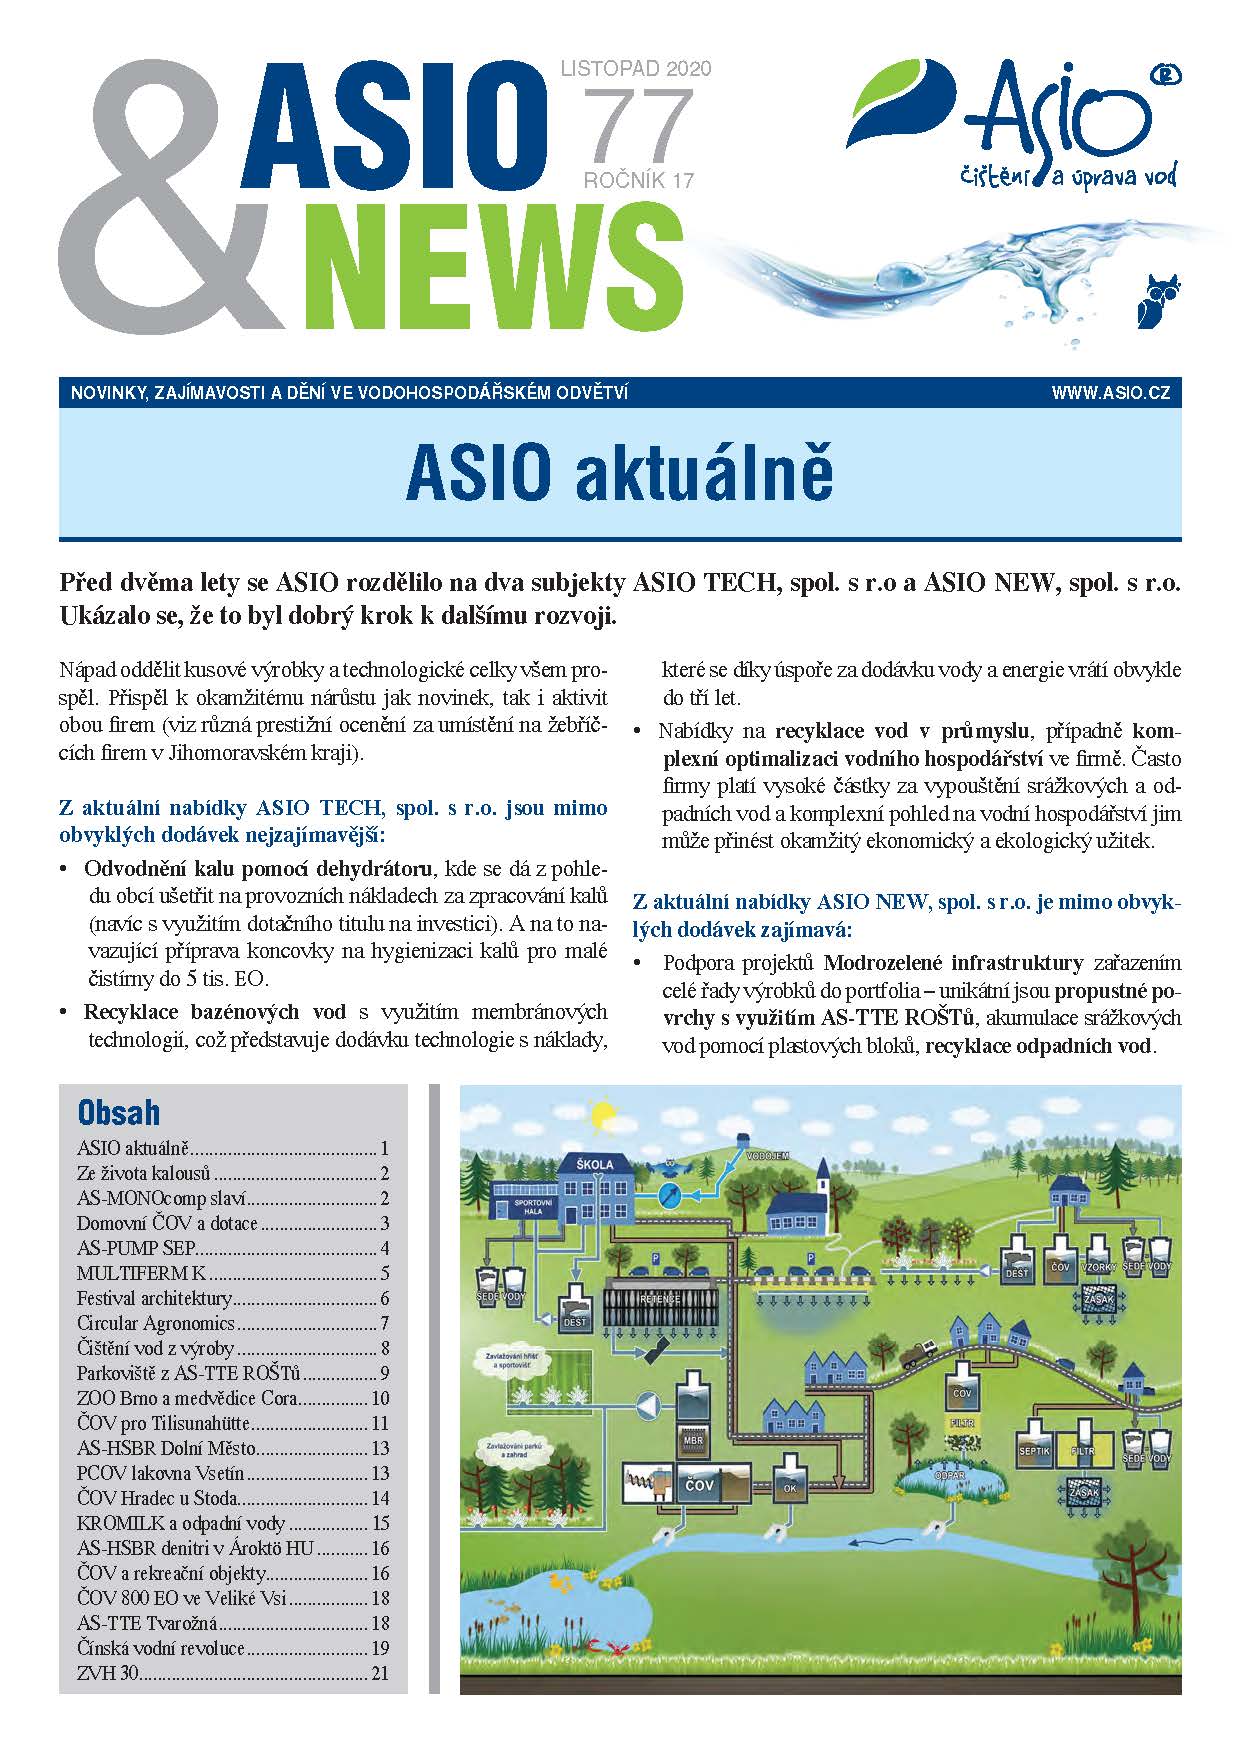 ASIO NEWS 77